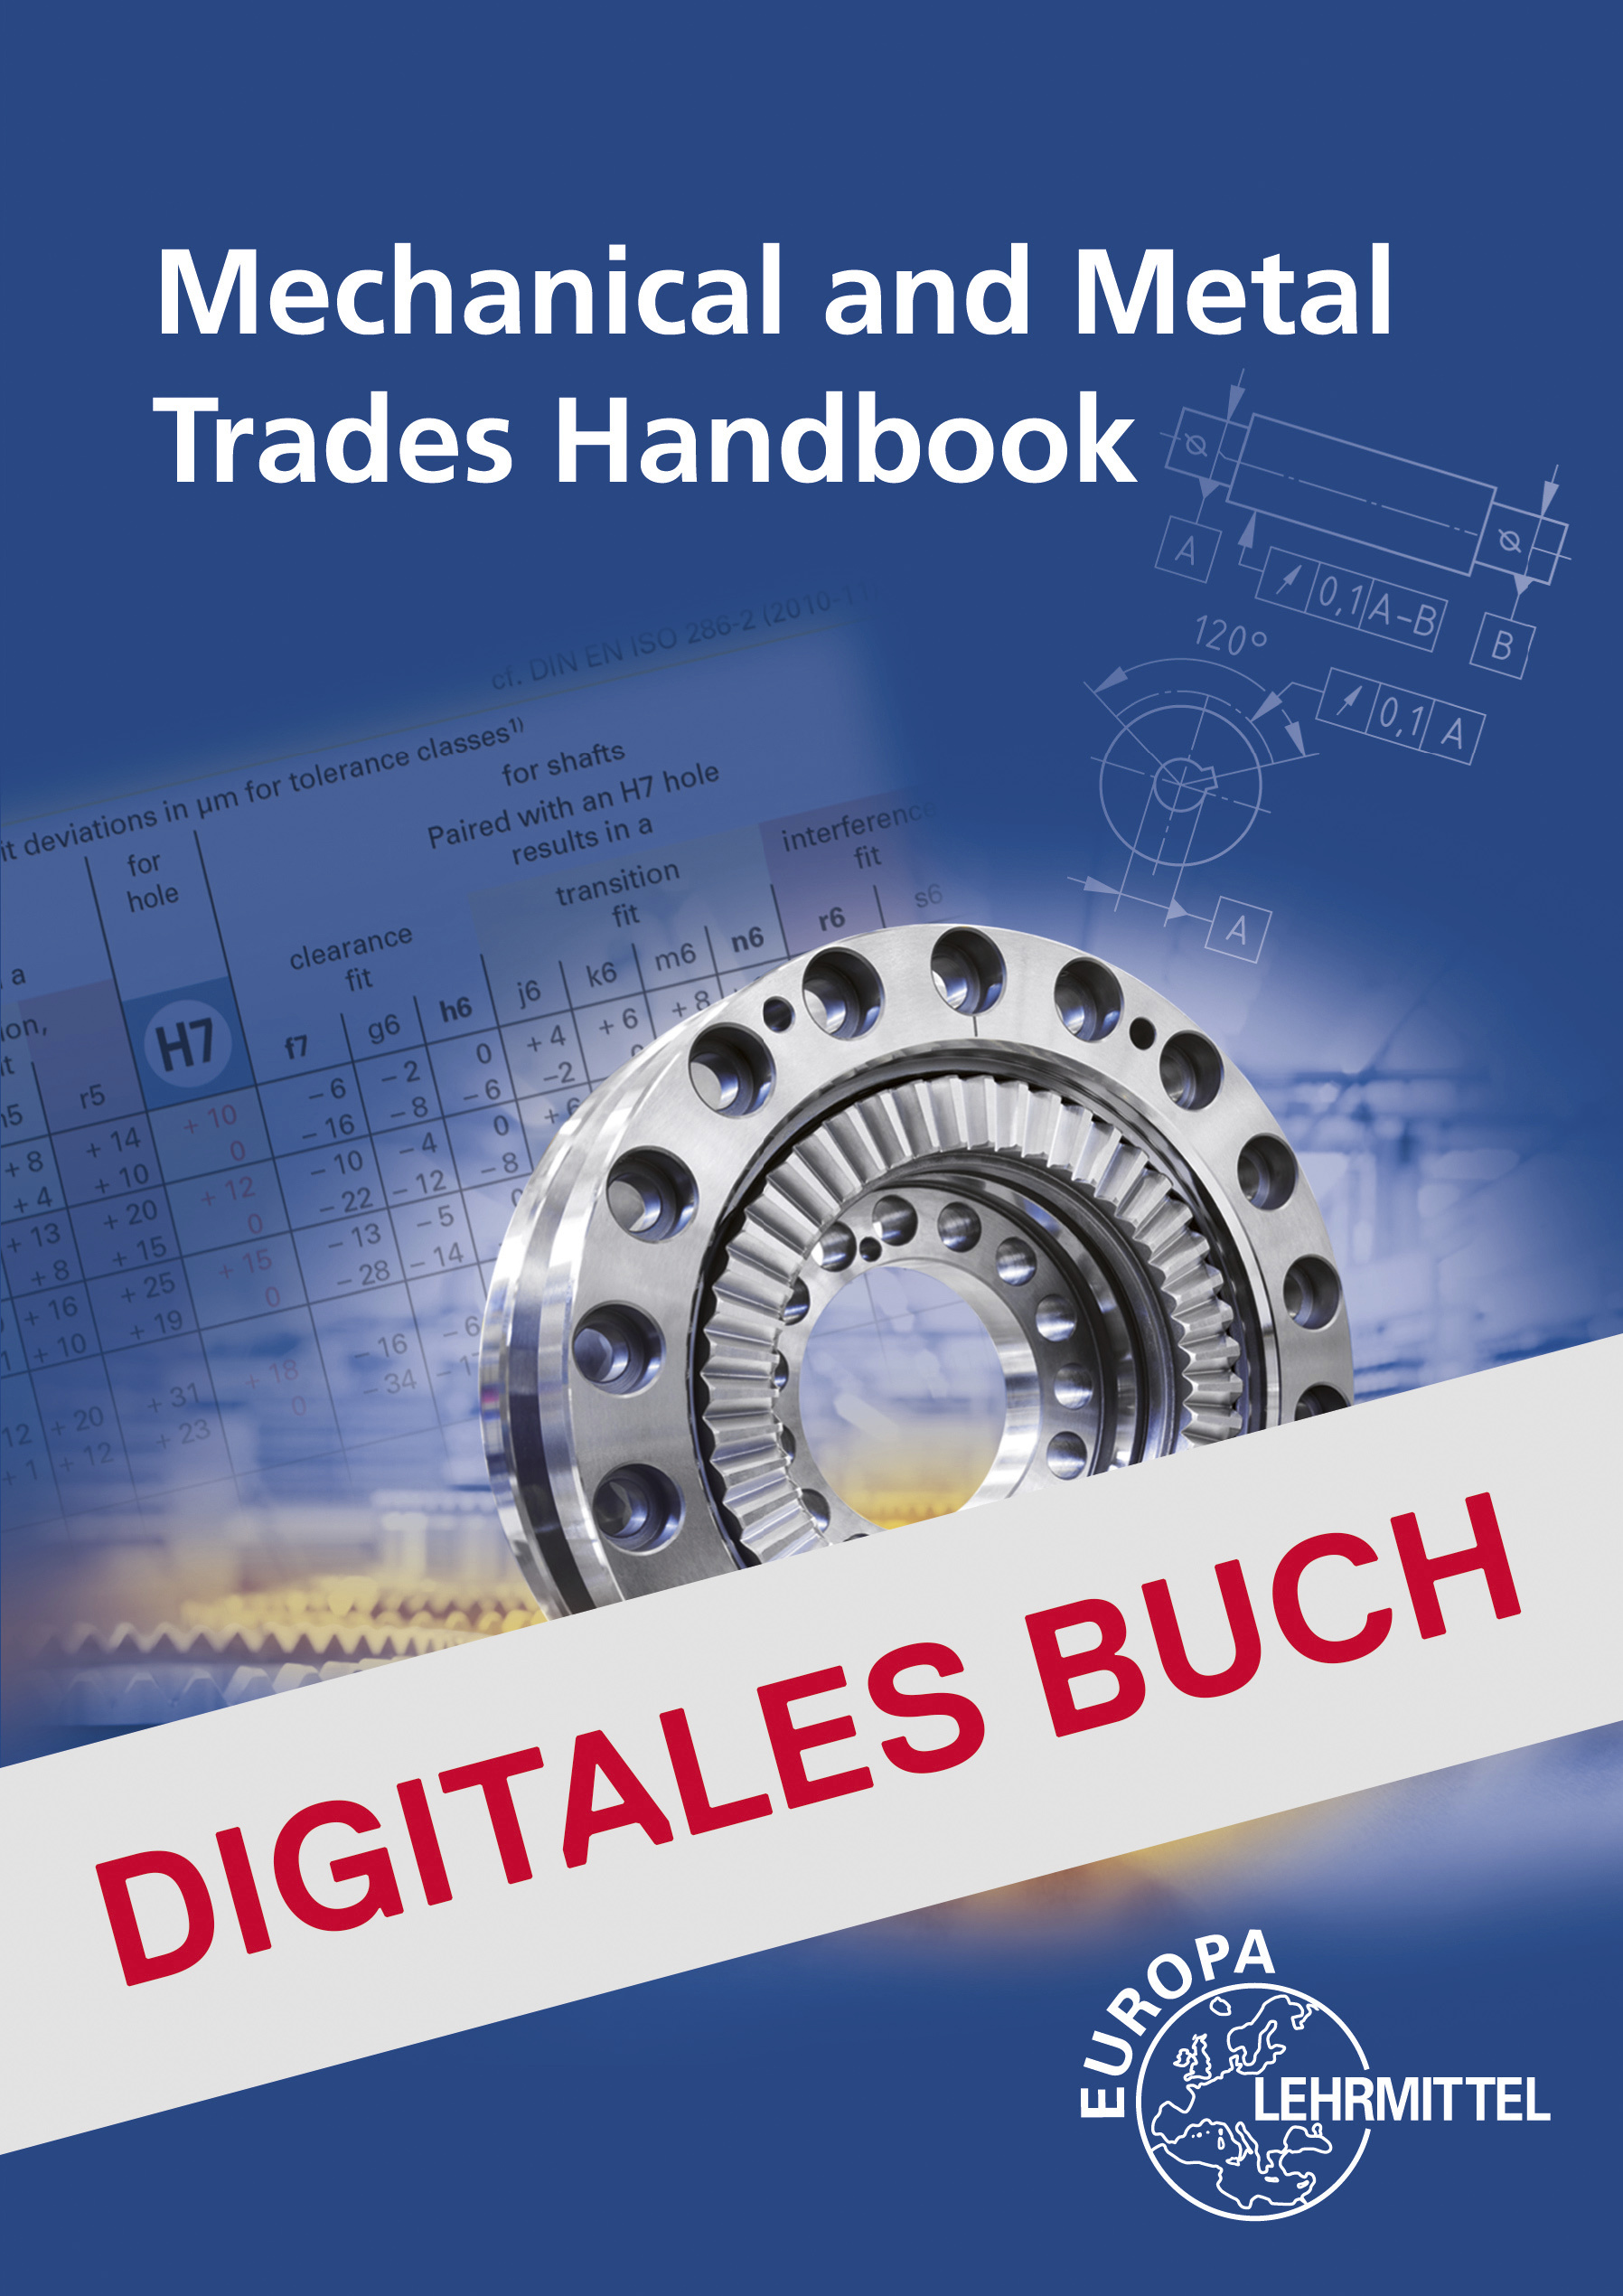 Mechanical and Metal Trades Handbook - Digitales Buch